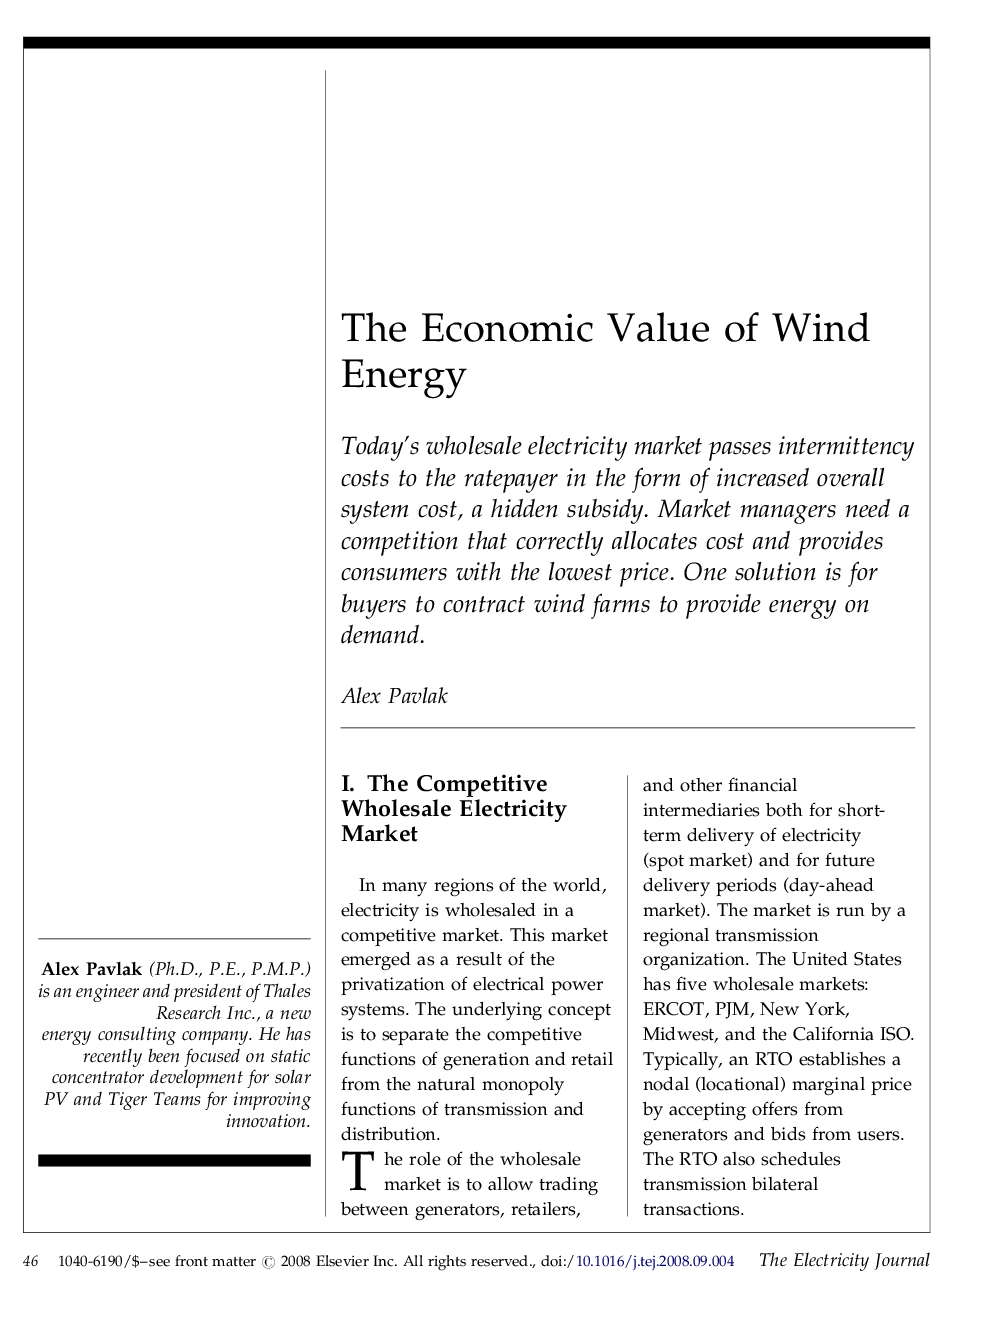 The Economic Value of Wind Energy